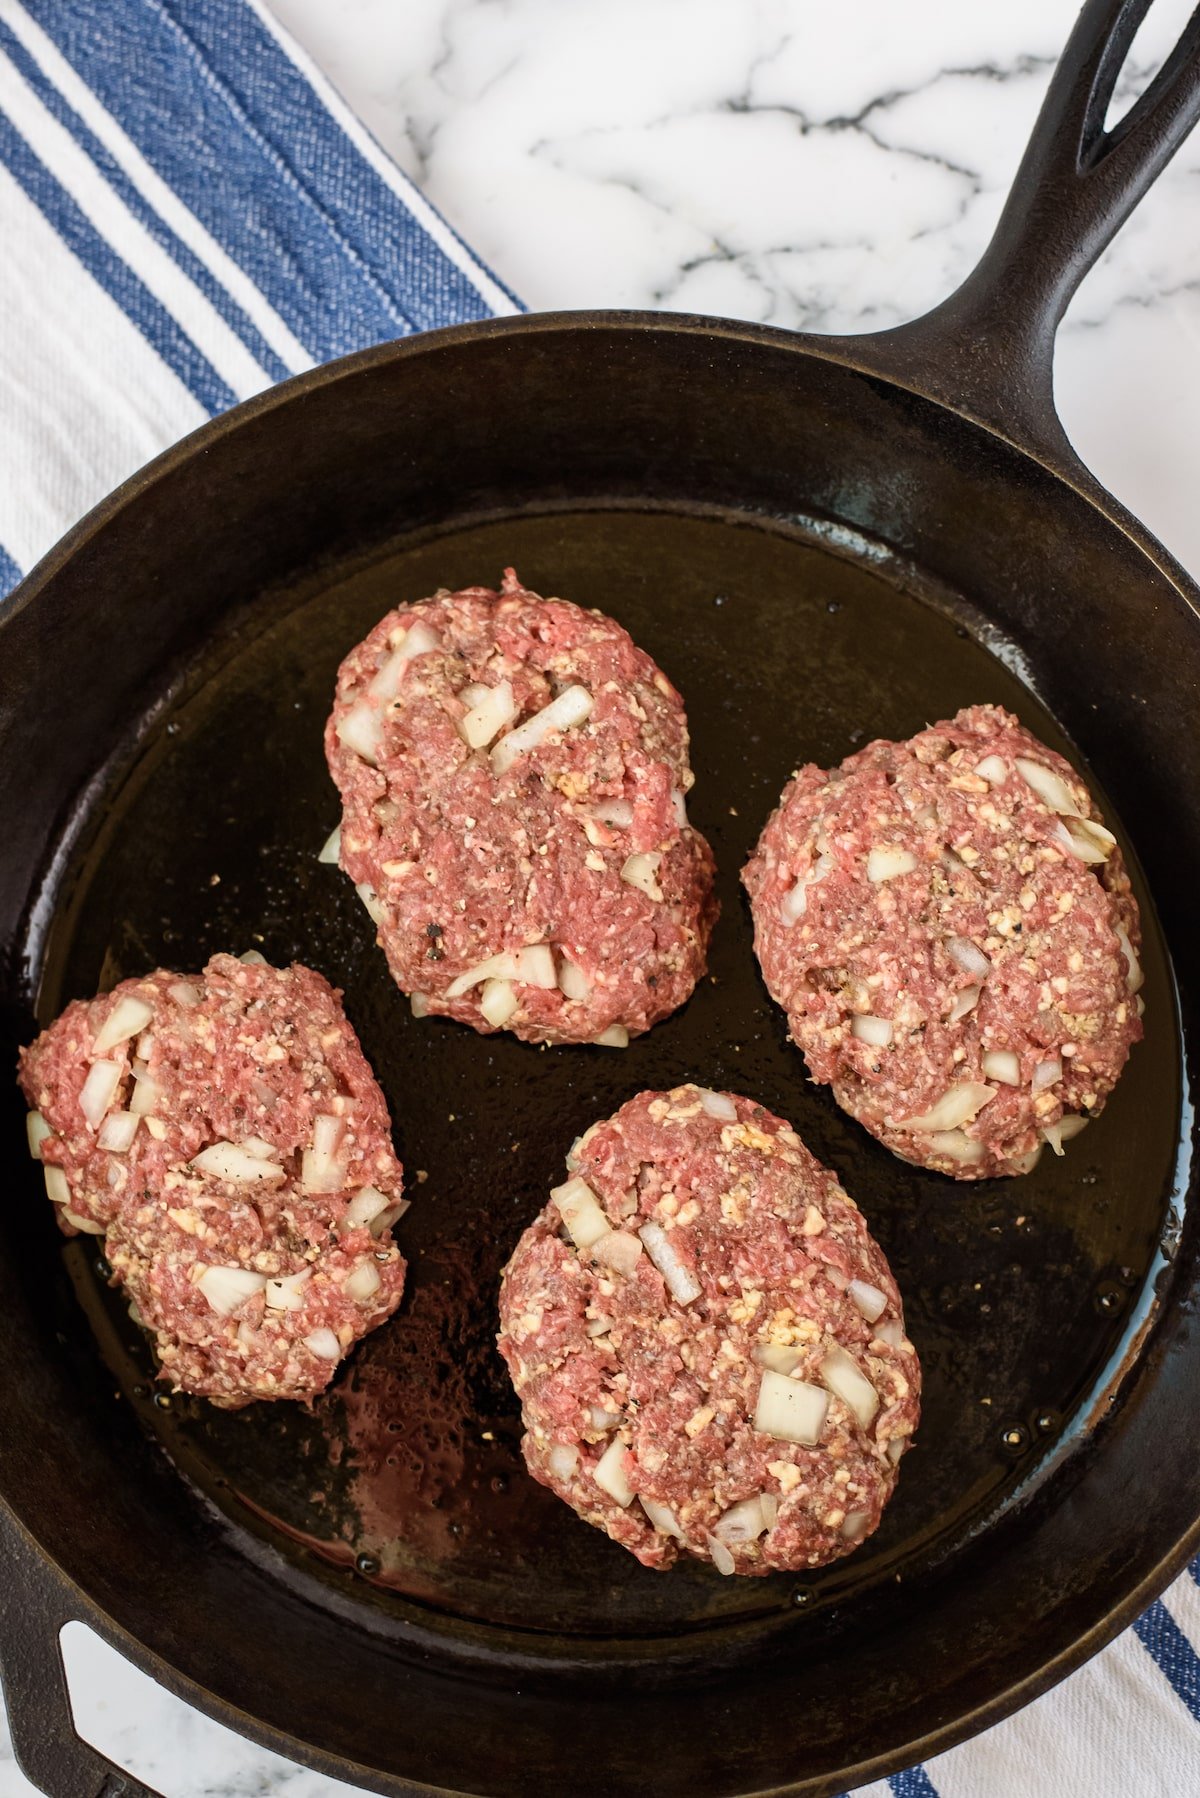 four steaks in sauce in a black pan.